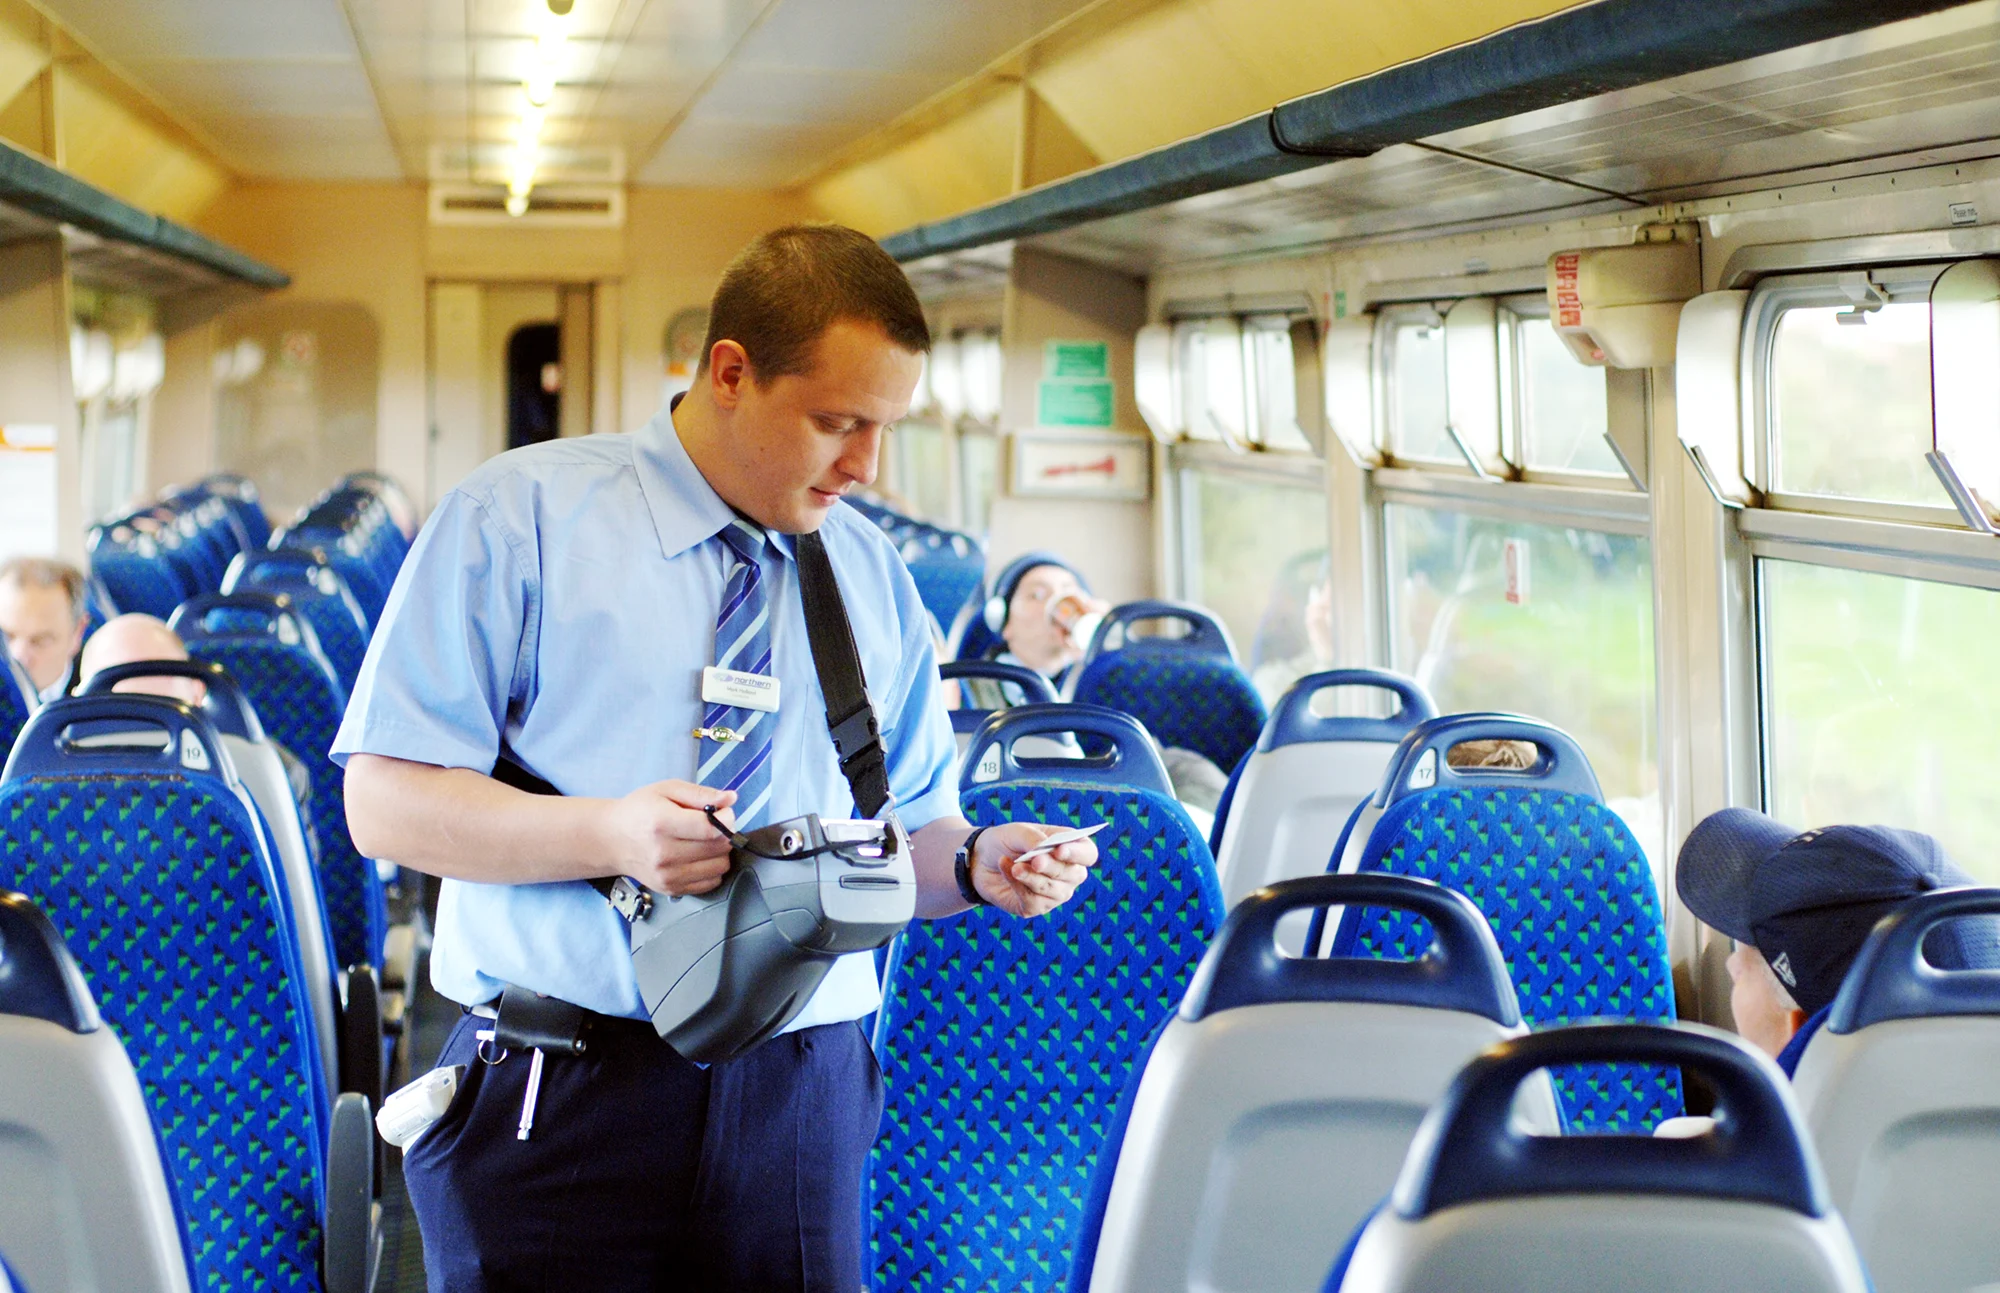 A male train revenue inspector checks a passenger's ticket onboard a train